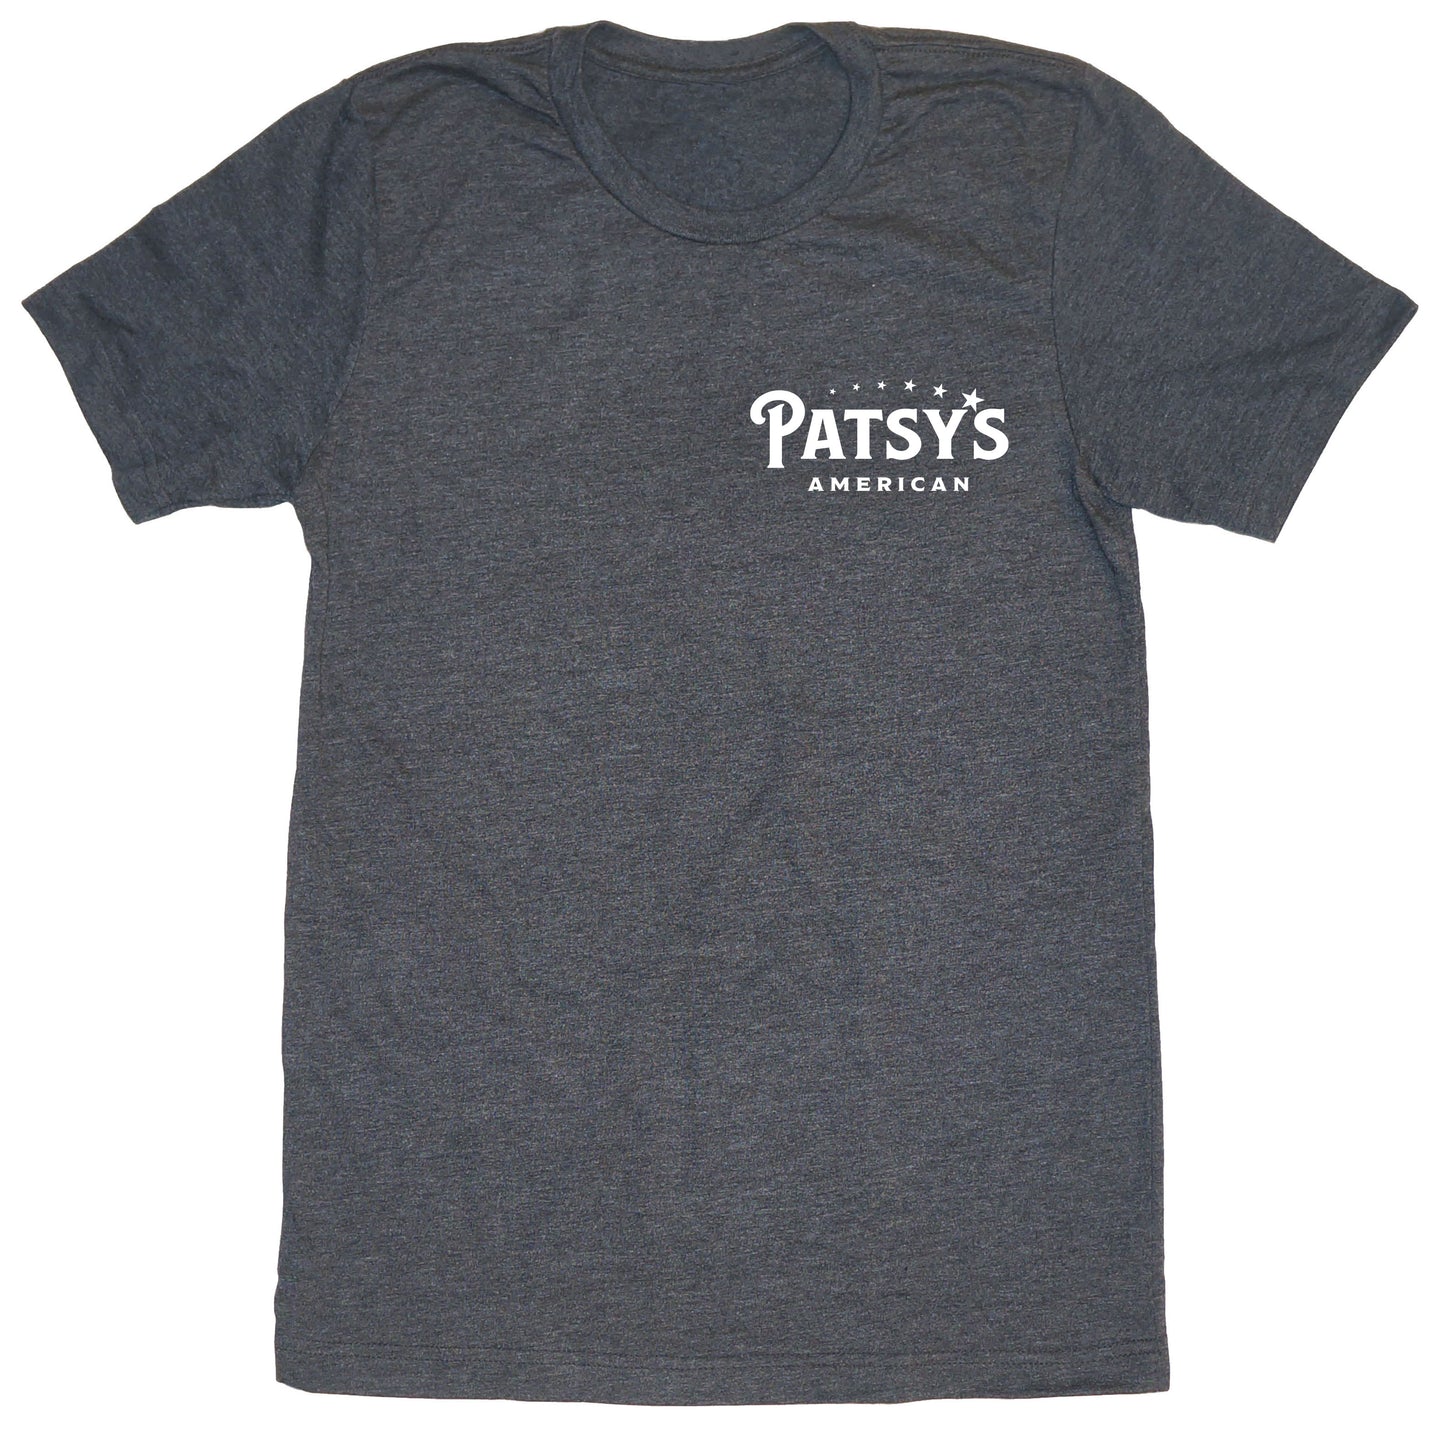 Patsy's American T-Shirt